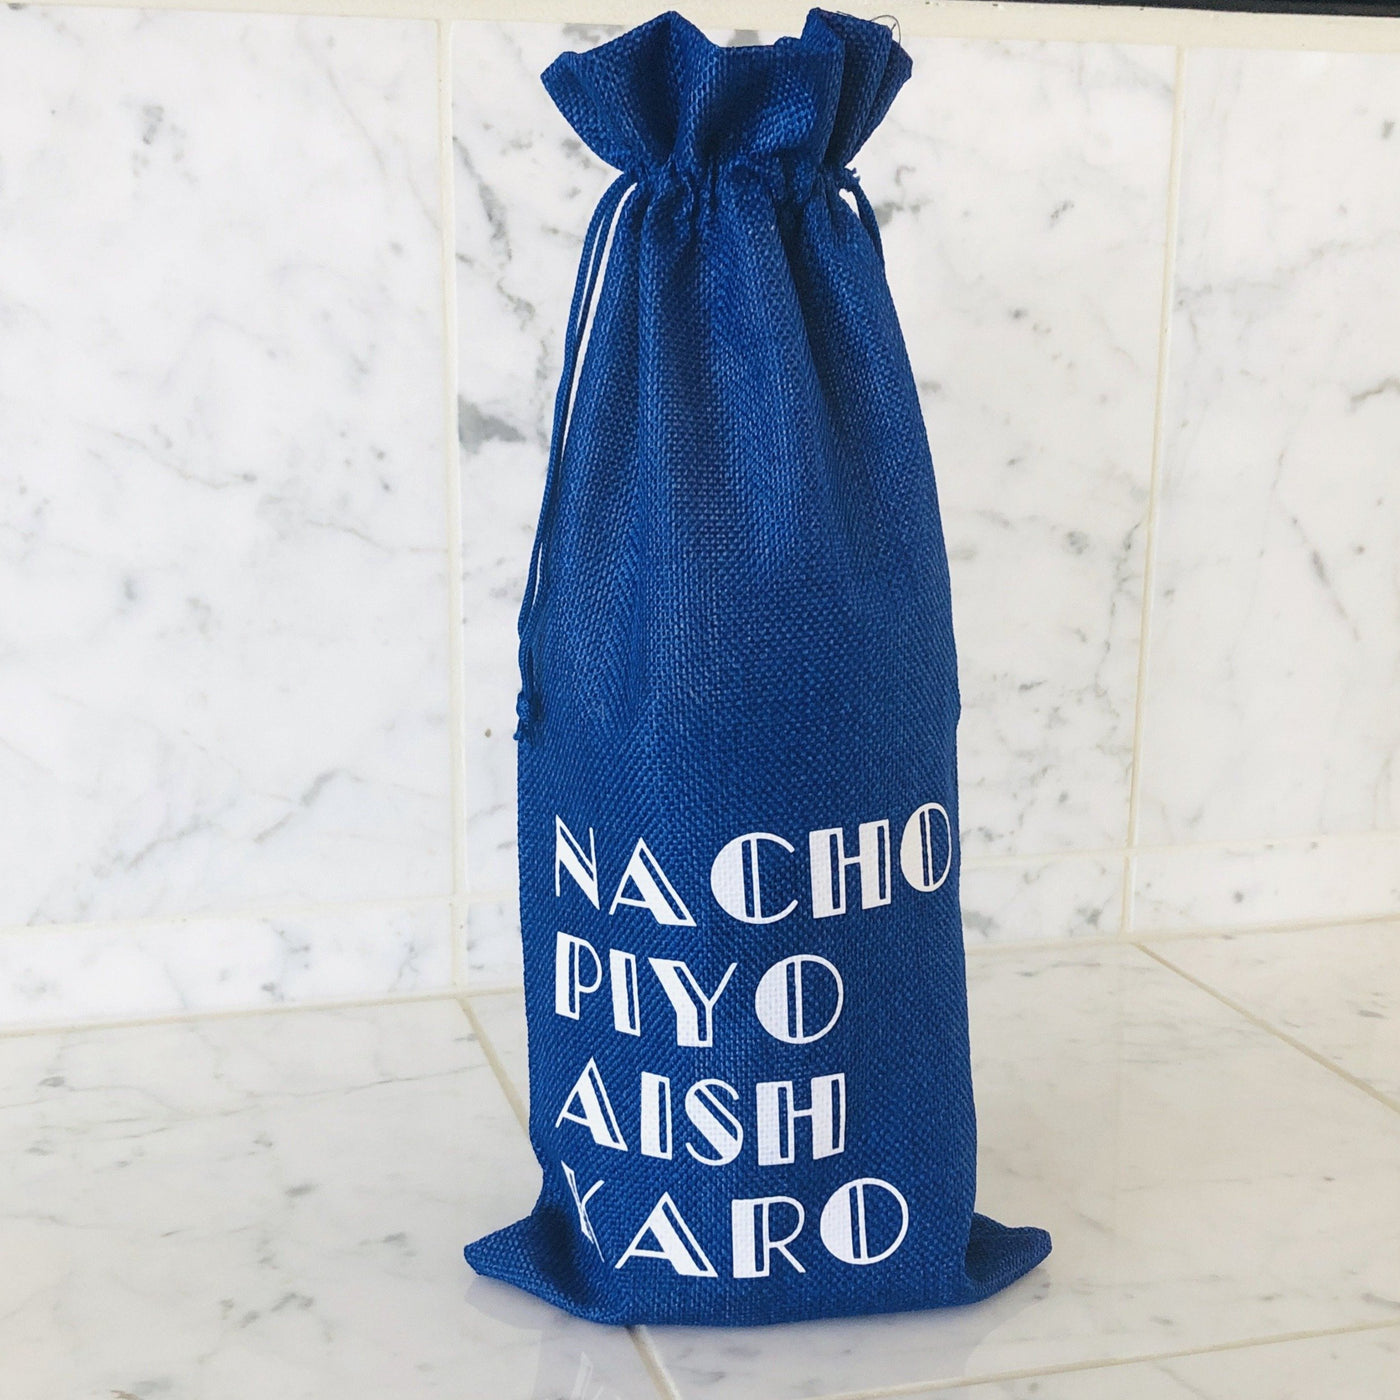 Nacho Piyo Aish Karo Wine Bag